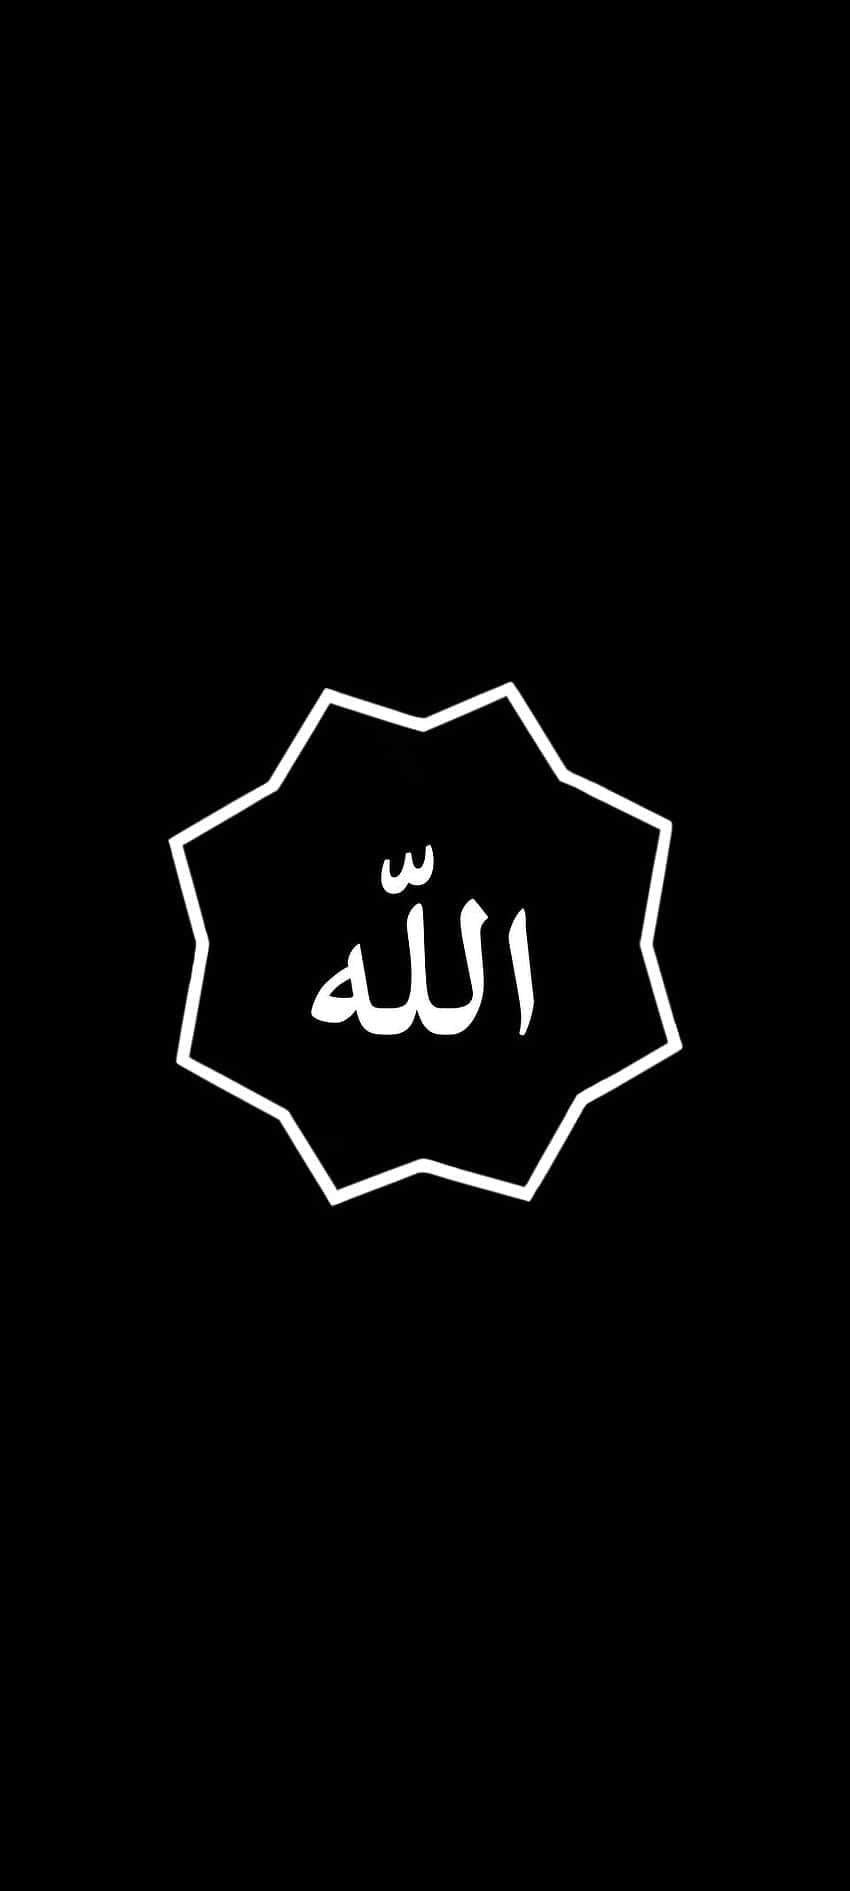 Allah Arabic Writing God Name Arabichealing Stock Vector (Royalty Free)  1701869299 | Shutterstock